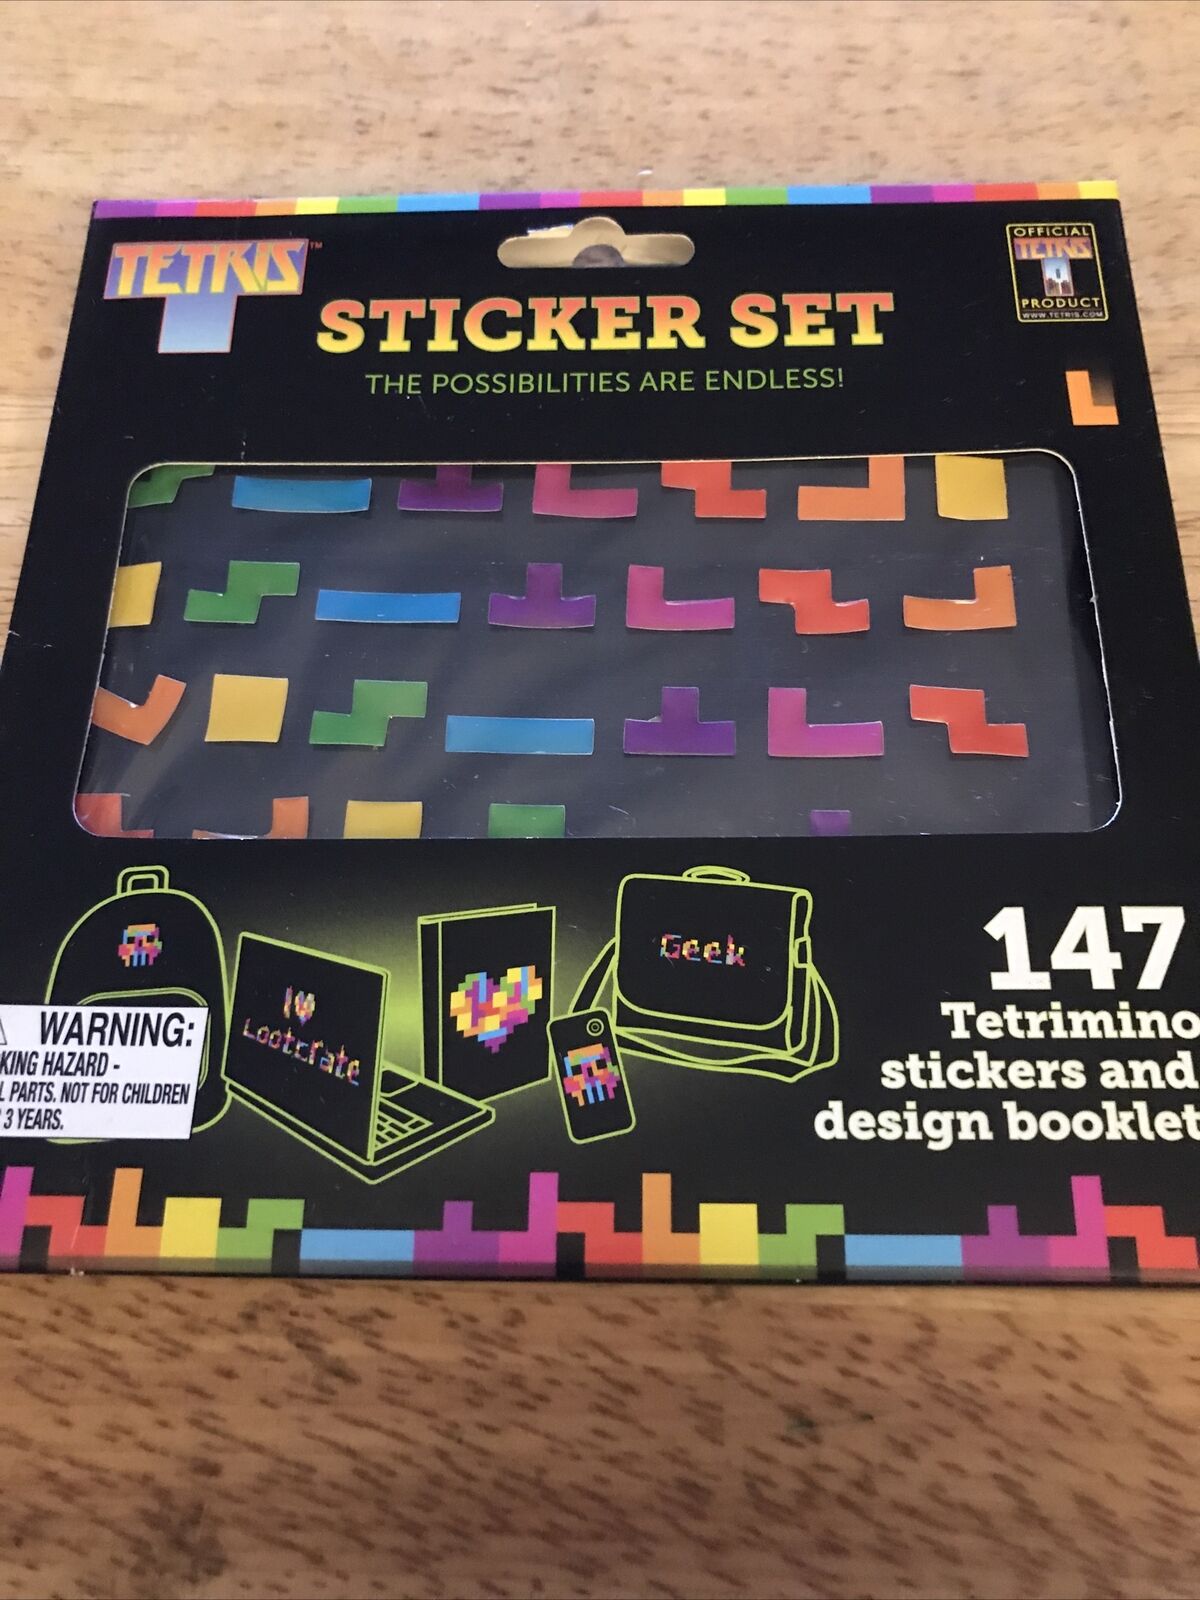 Official Tetris Sticker Set 147 Tetrimino Stickers & Design Booklet New Sealed